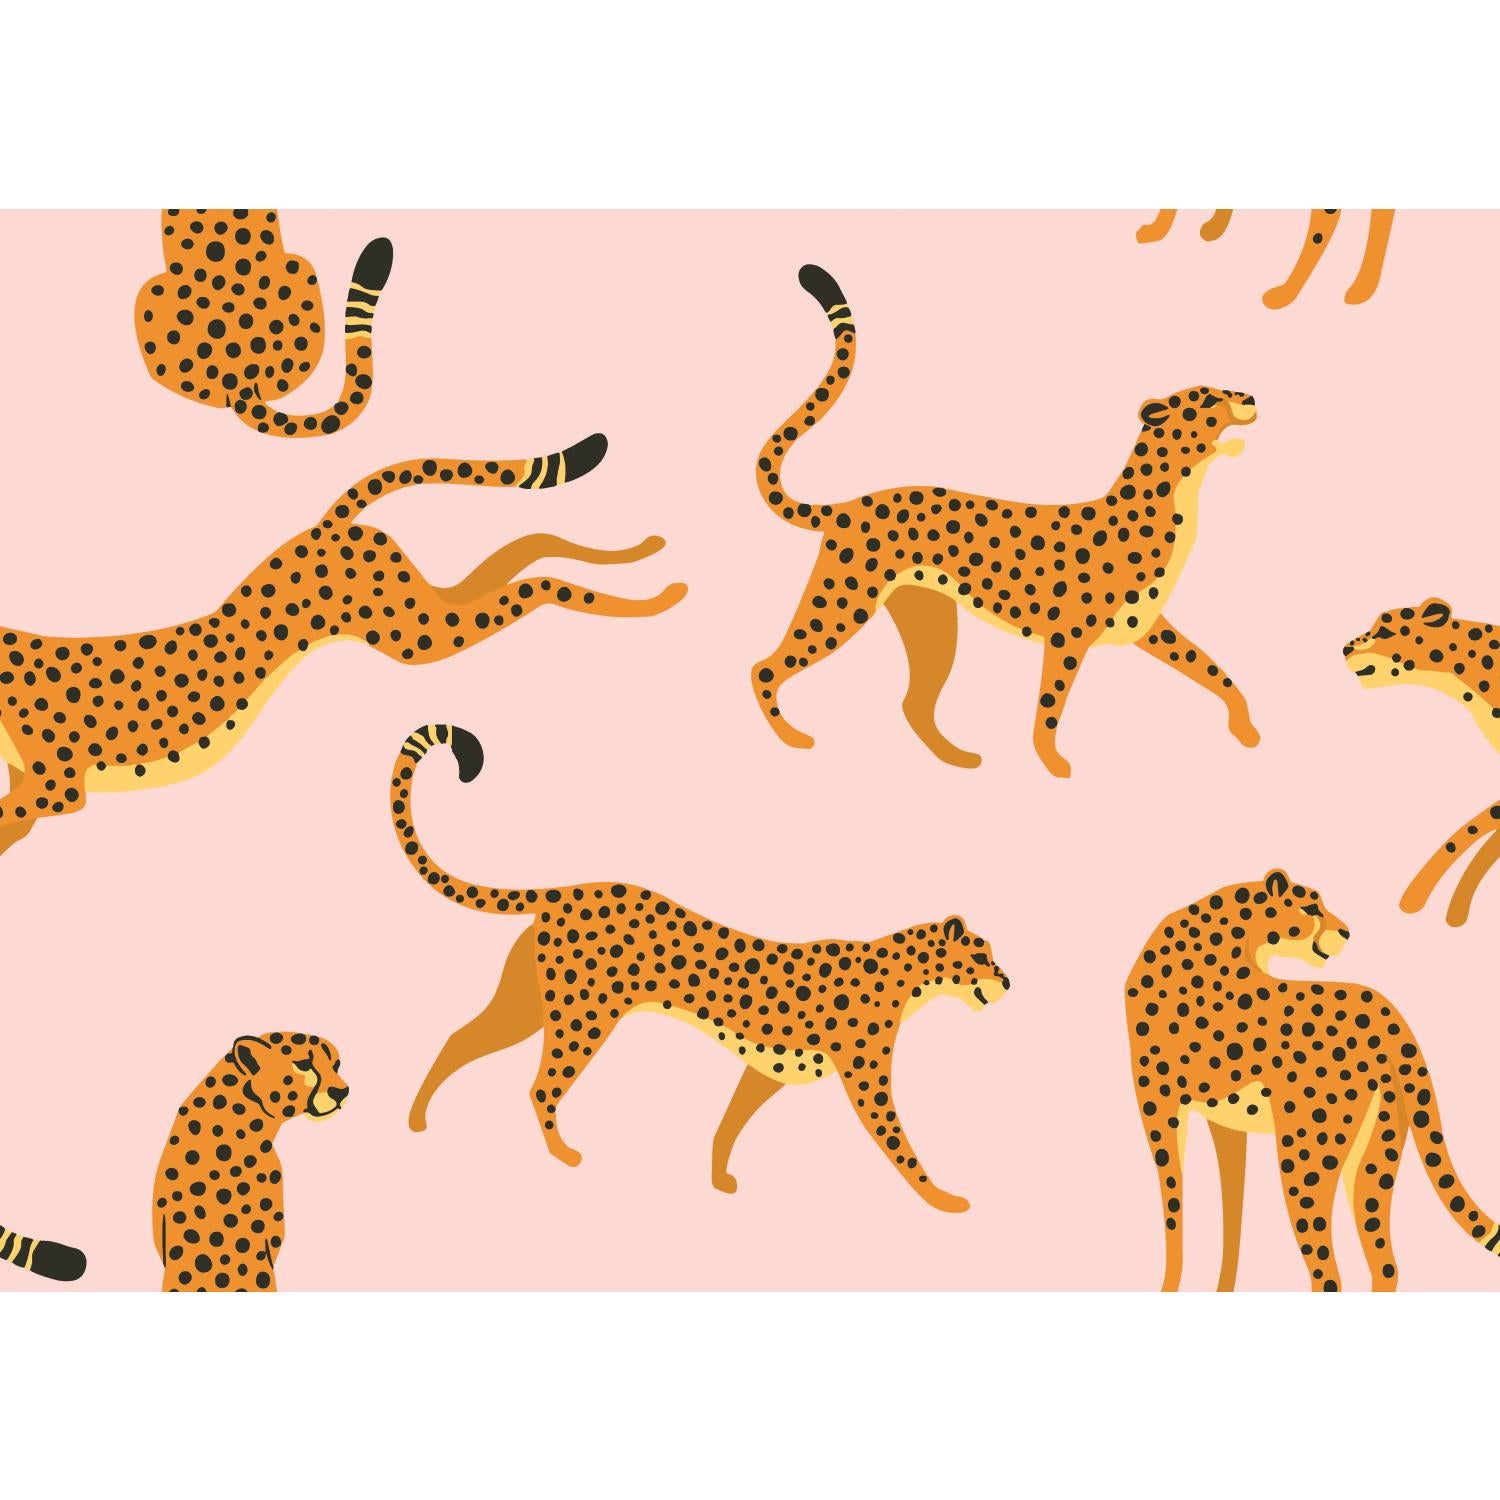 255050 Gray Silver Leopard Cheetah Wallpaper – wallcoveringsmart